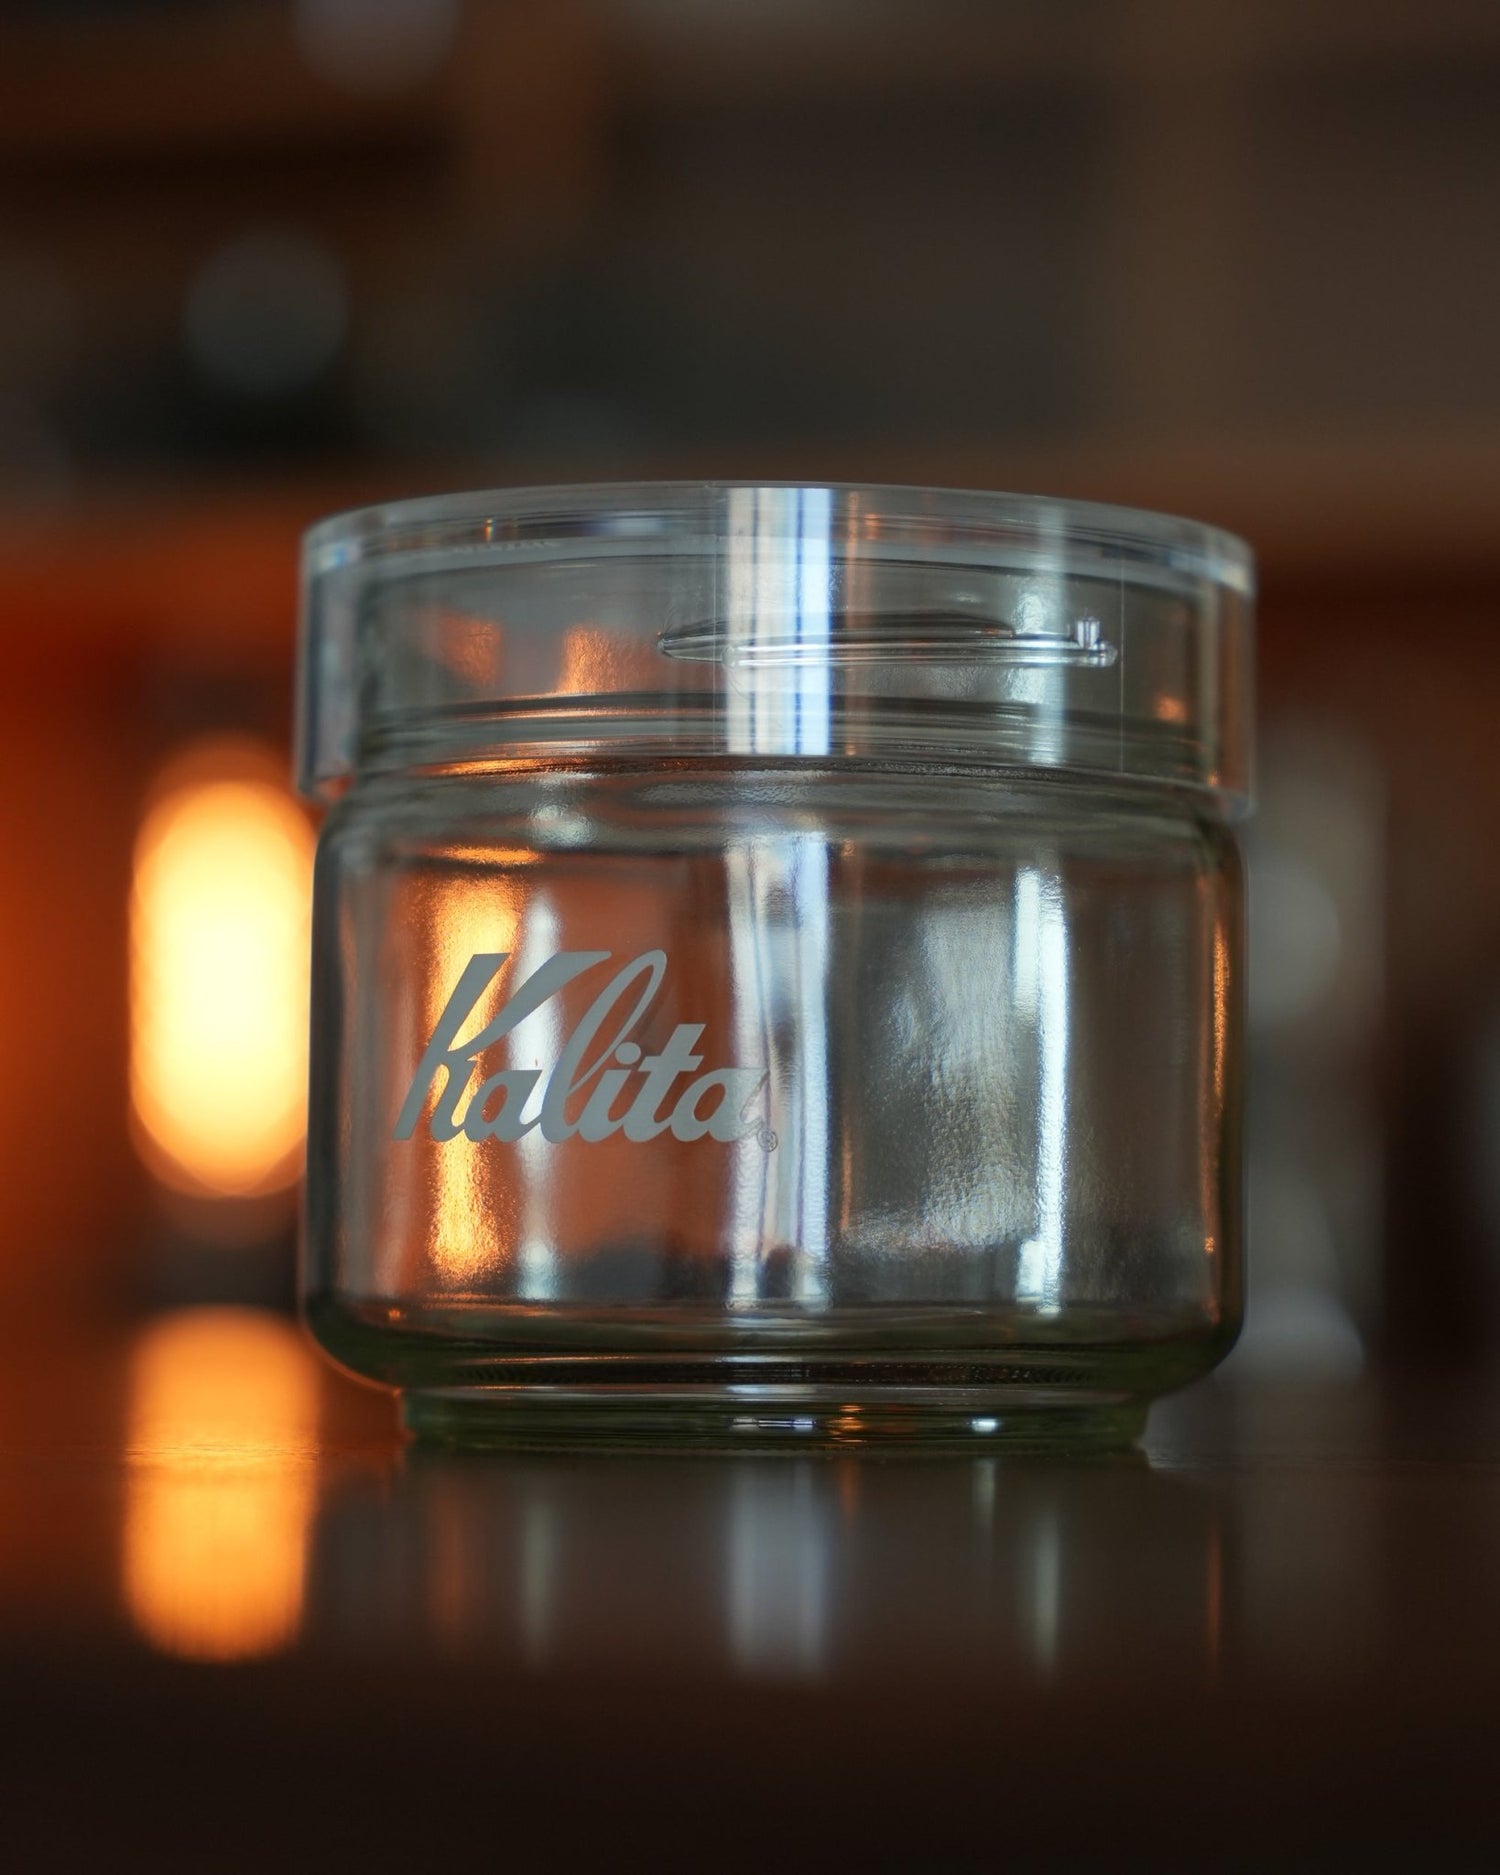 Kalita 玻璃密封咖啡罐 150g - Coffee Stage 咖啡舞台